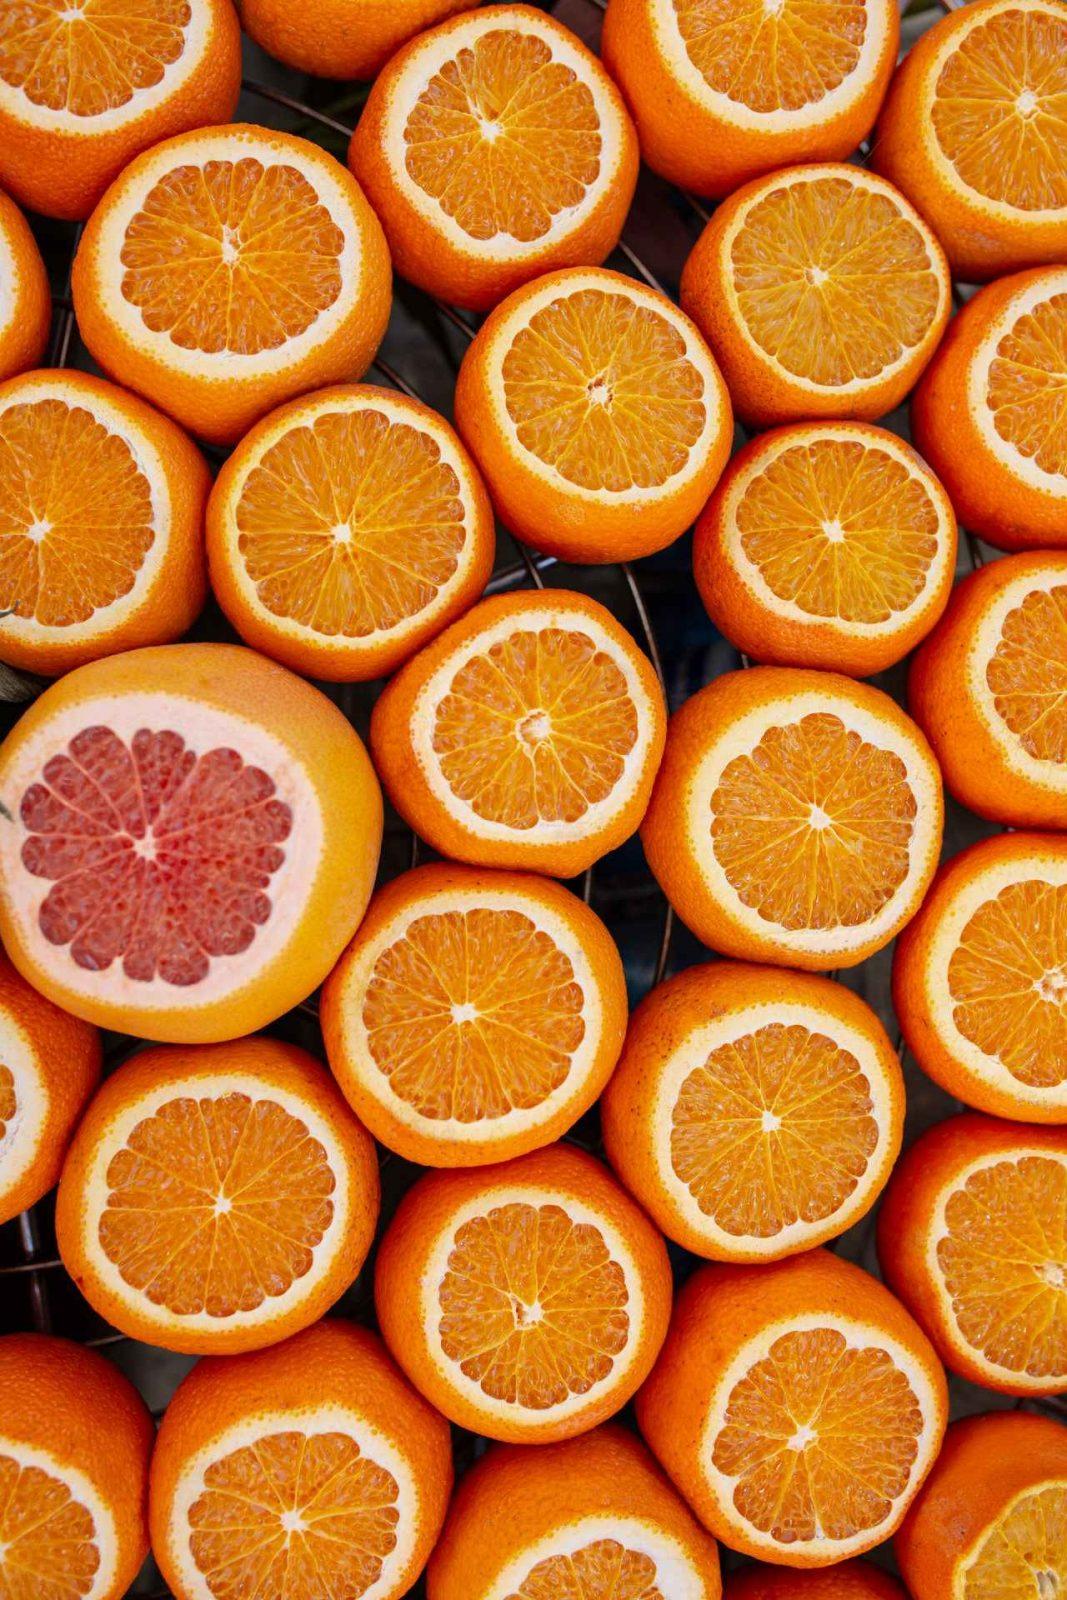 citrusfélék